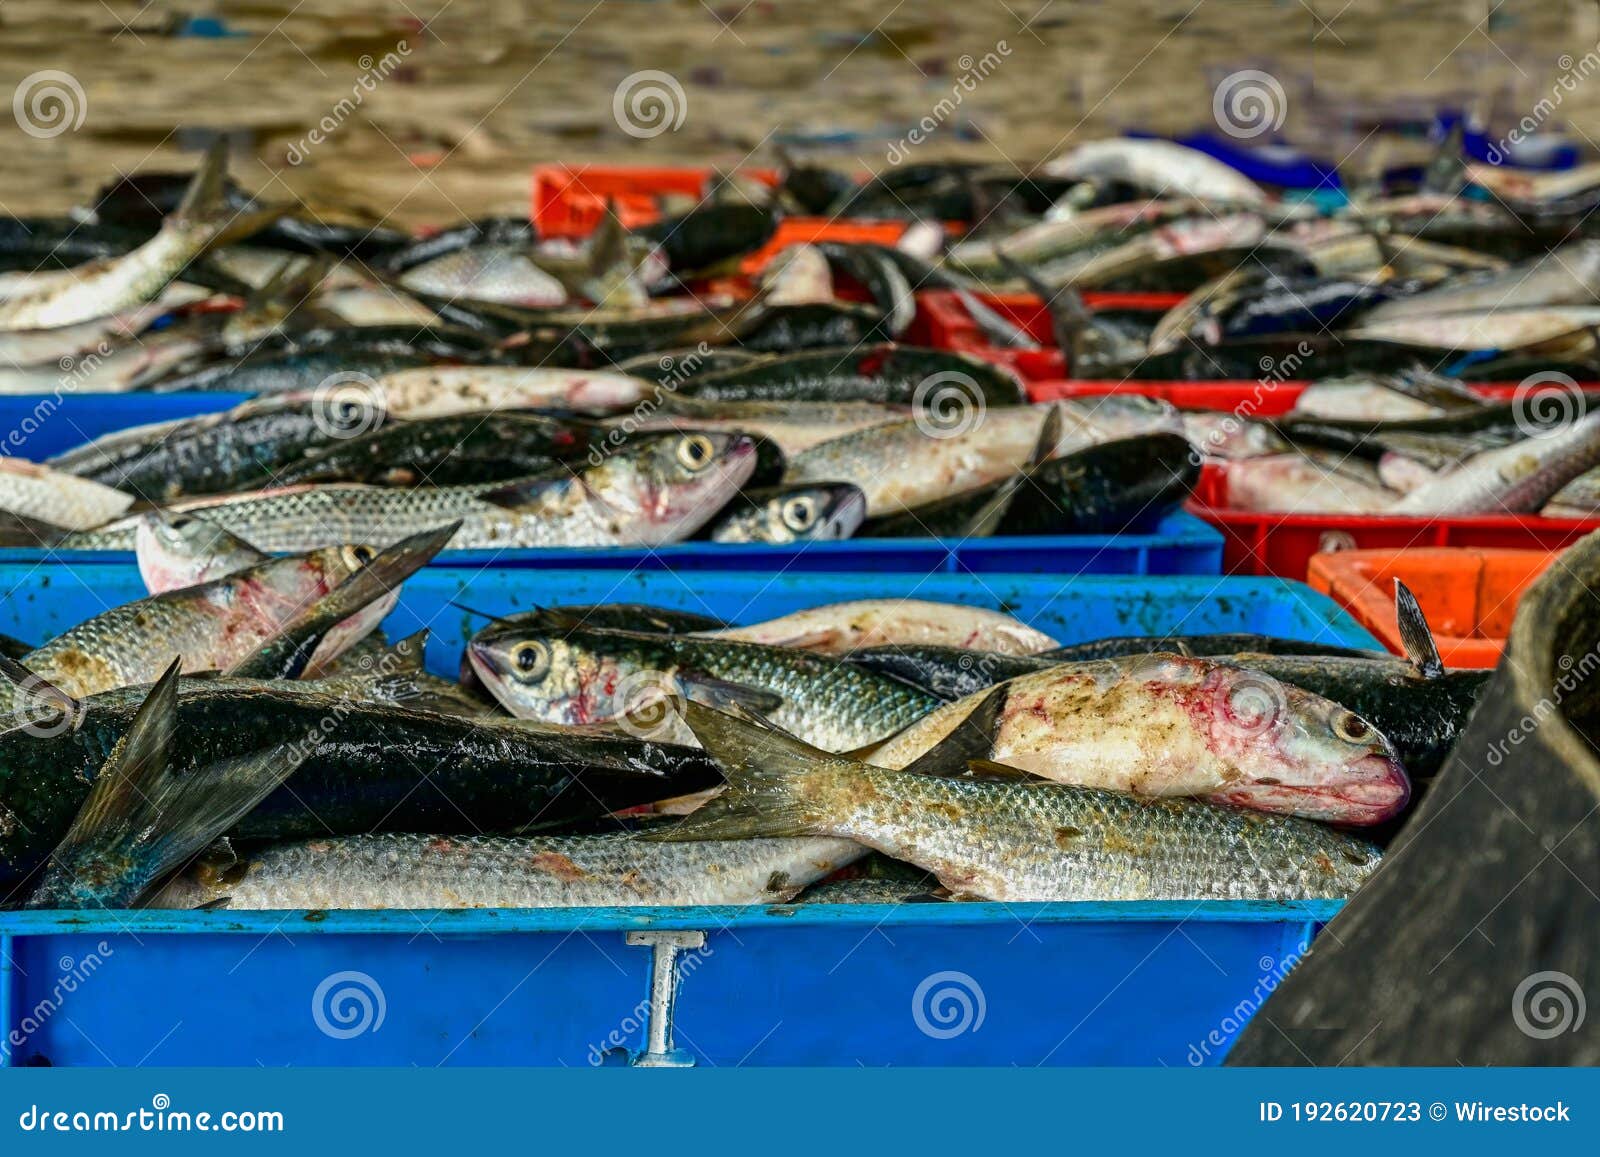 bahia de pucusana pescados frescos para comer